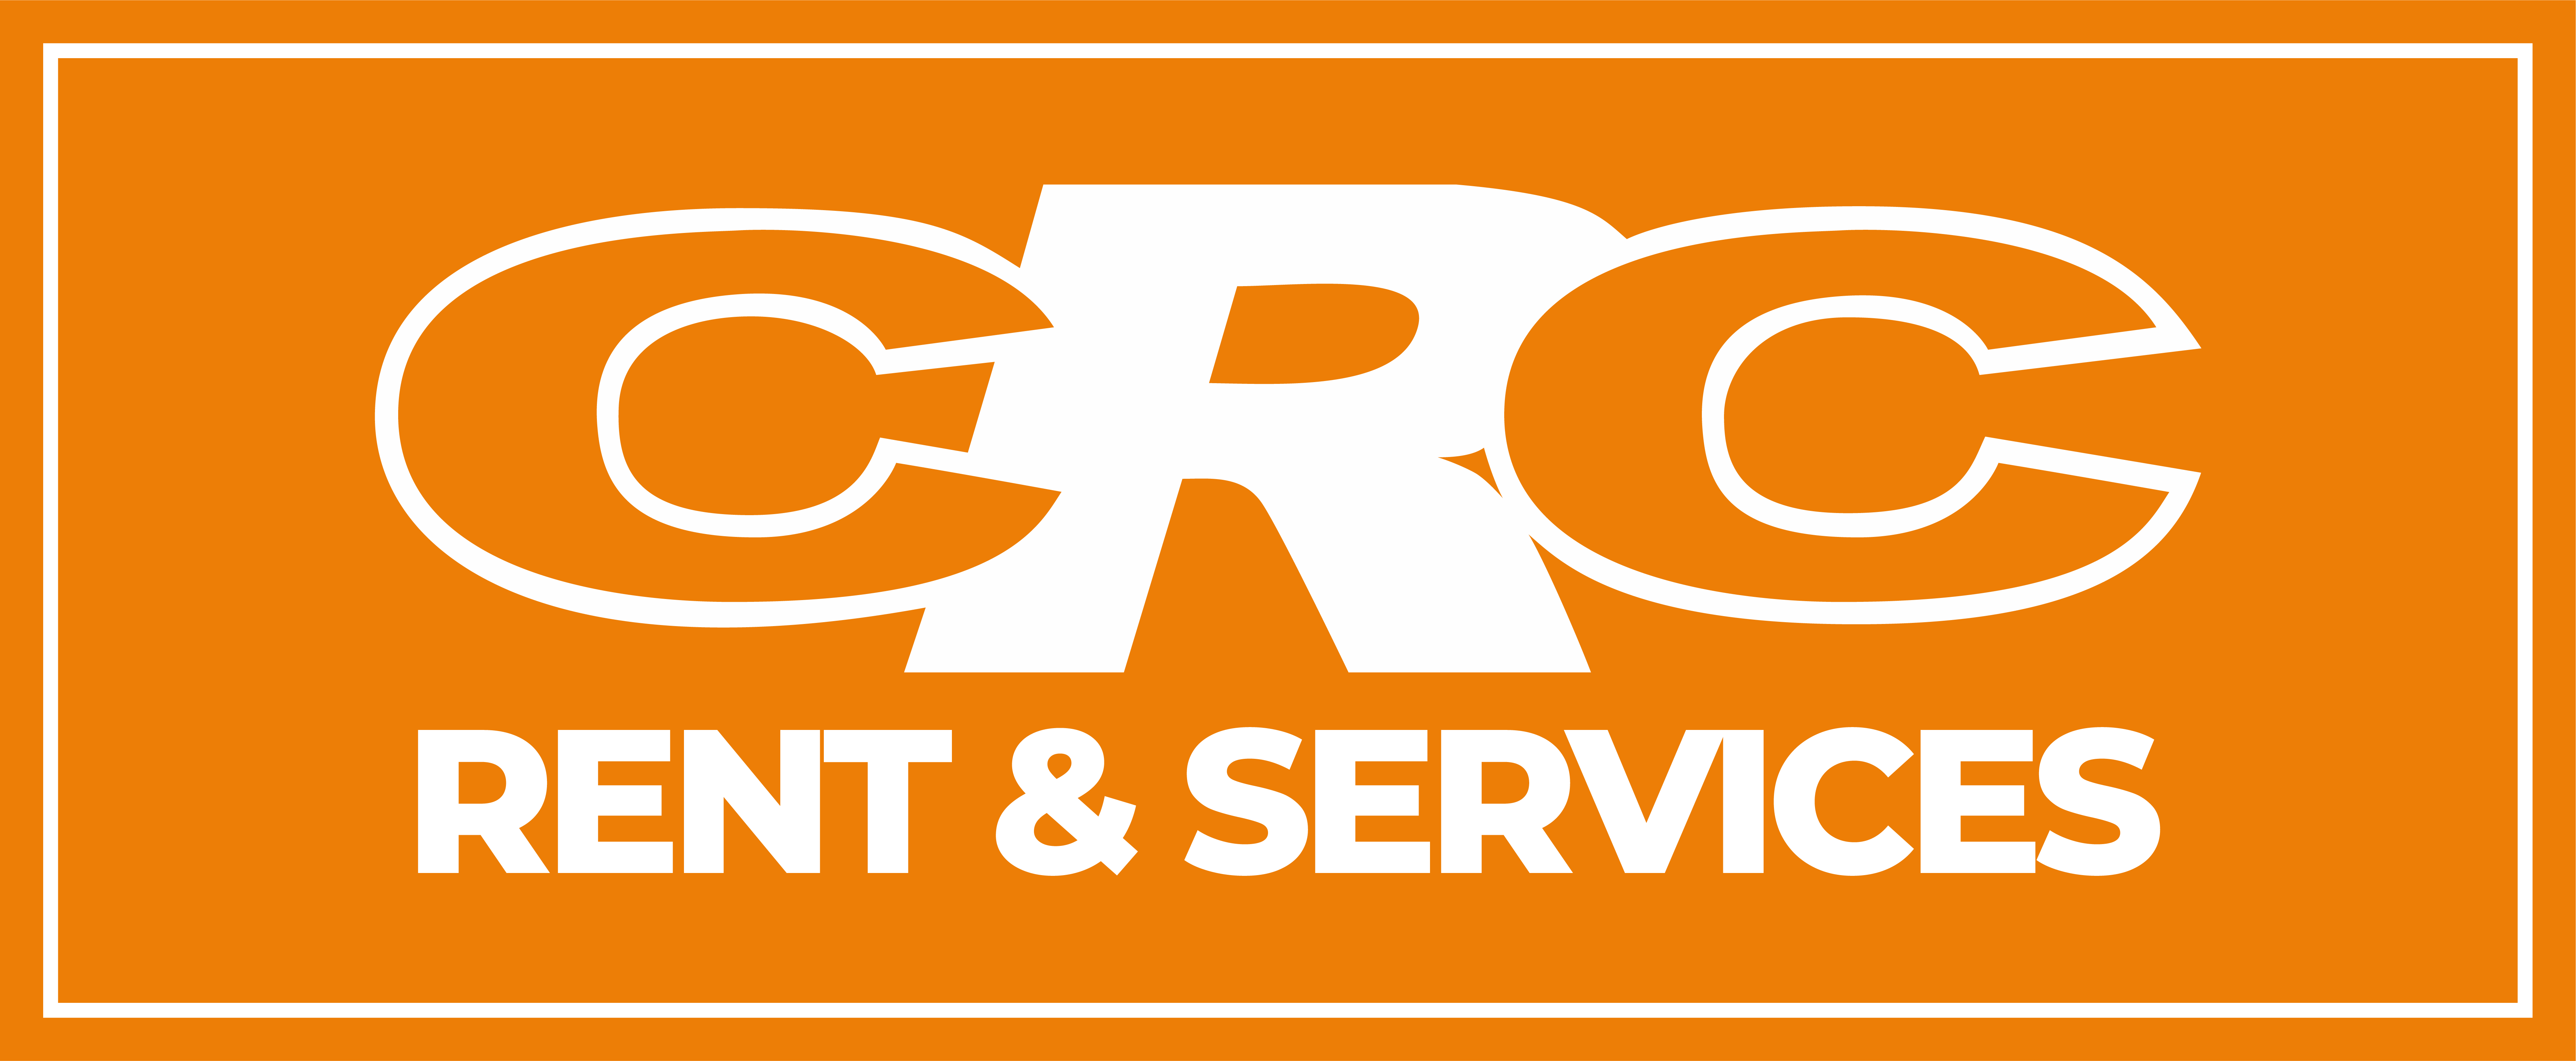 CRC-CEREA_Rent&Services-orizzontale